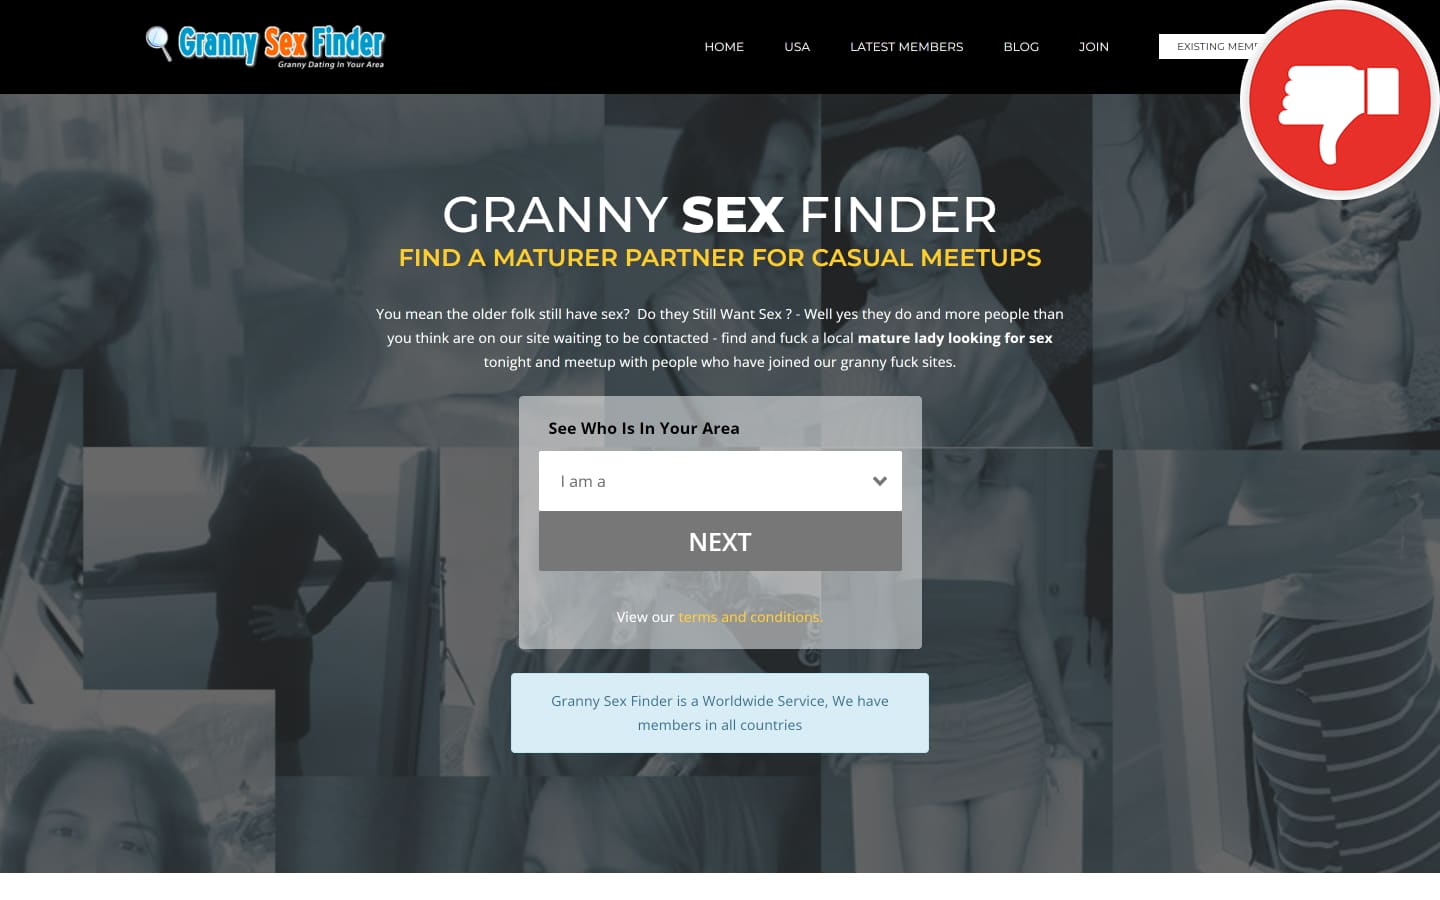 Review Granny-Sex-Finder.com scam experience